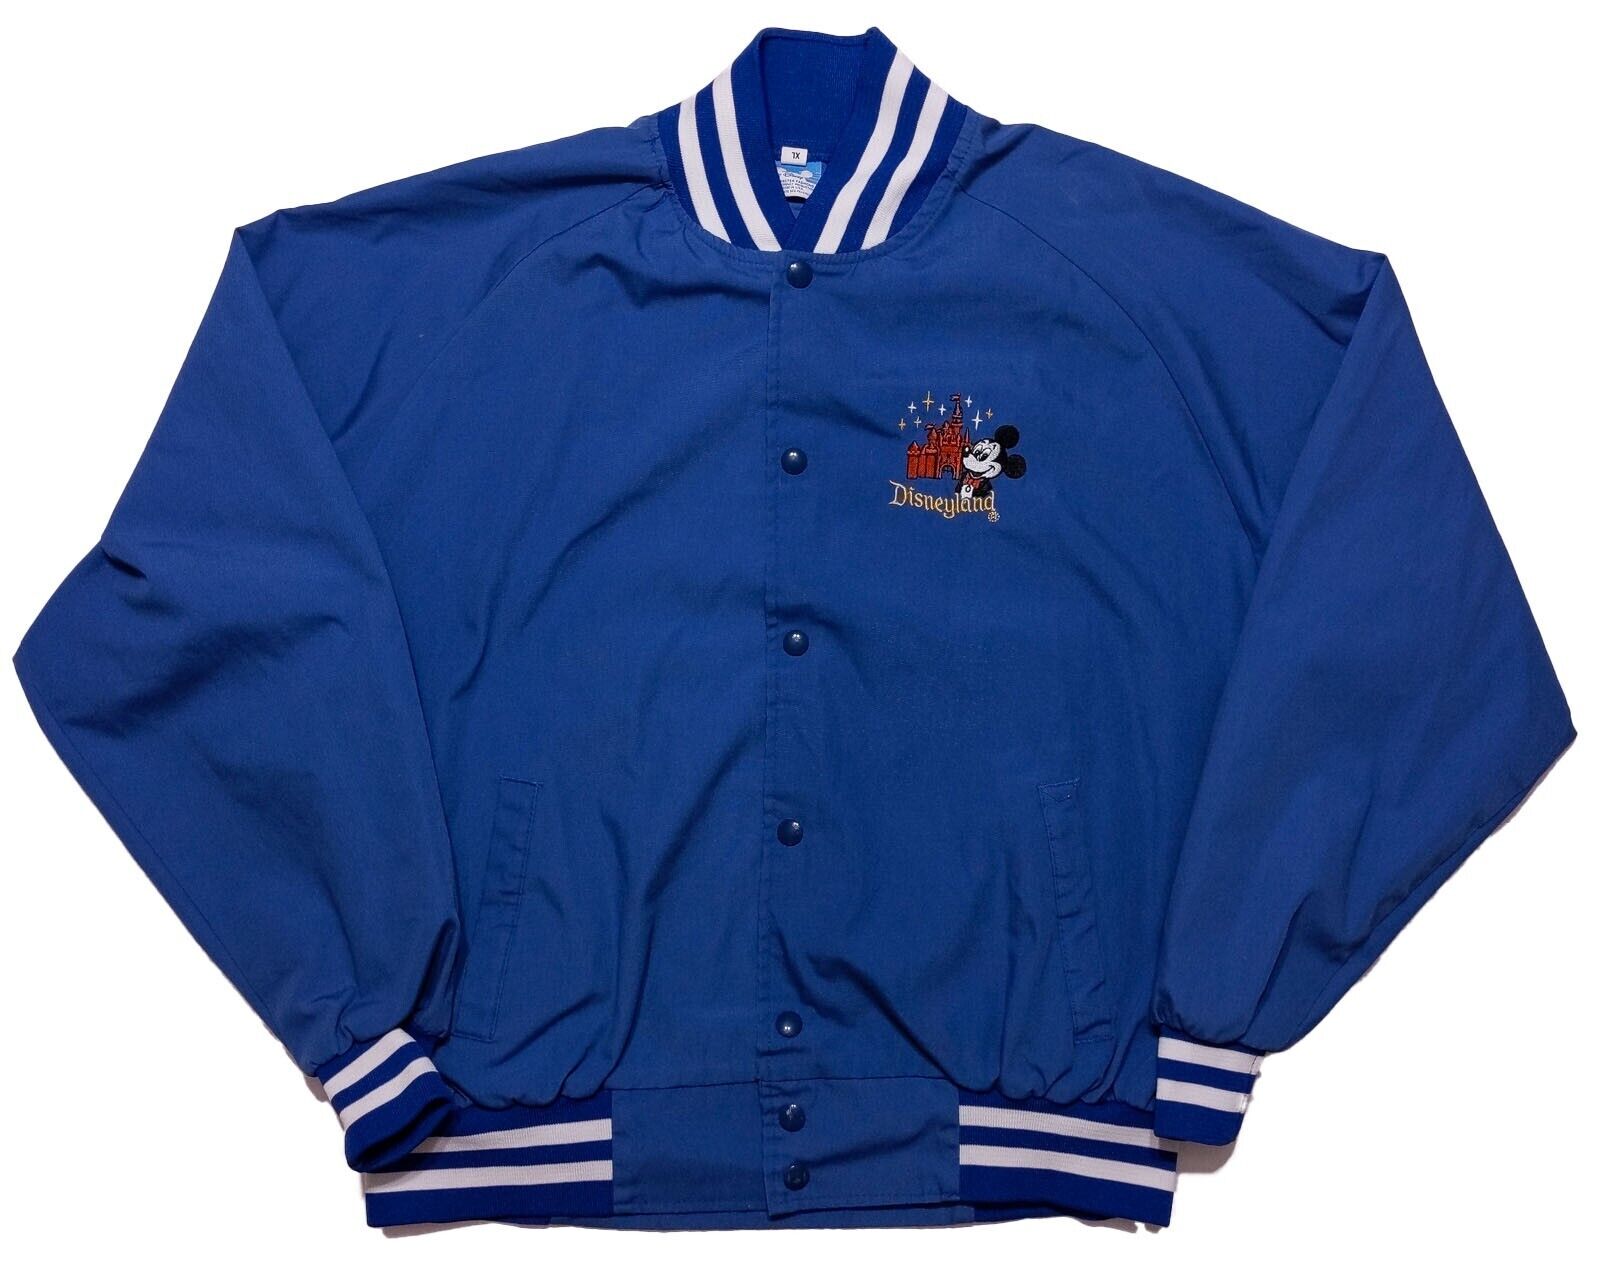 Vintage DISNEY Character Fashions Disneyland Jacket 1980s Blue Adult XL